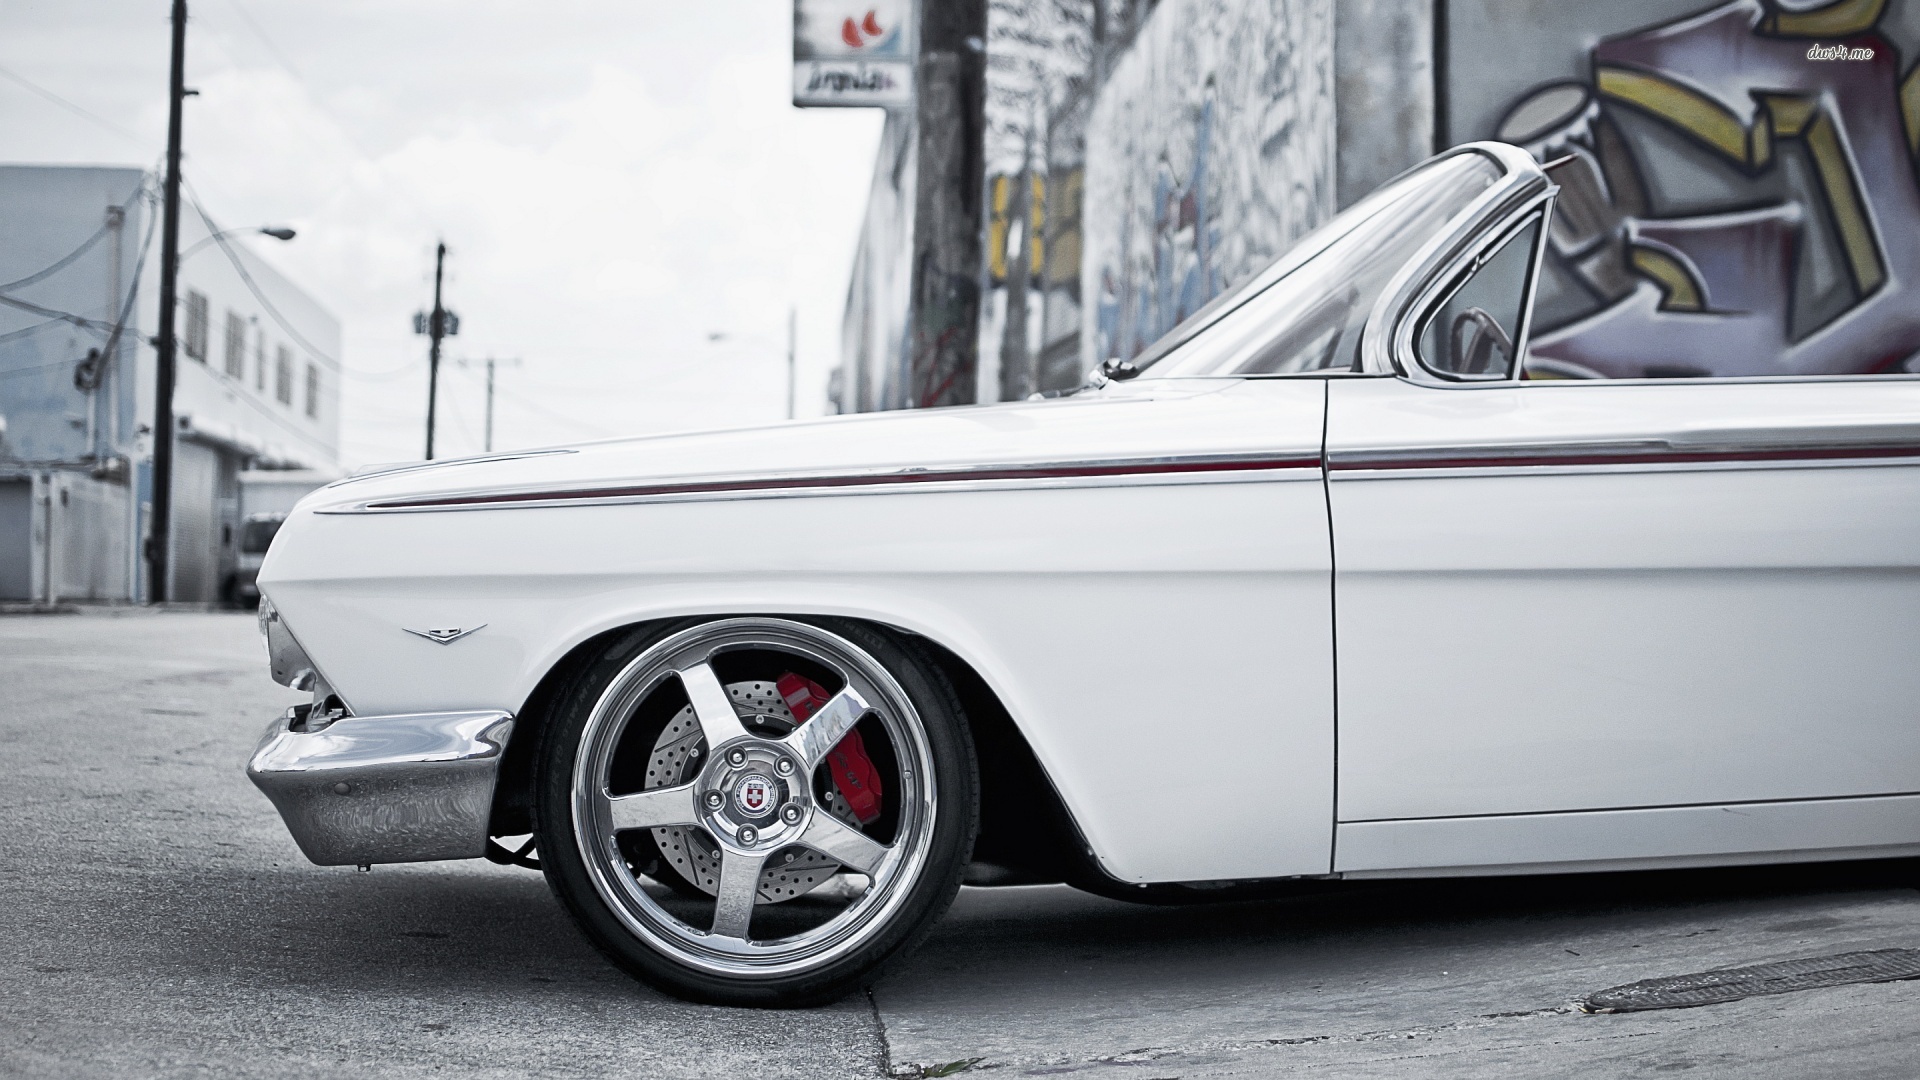 Impala 61 - HD Wallpaper 